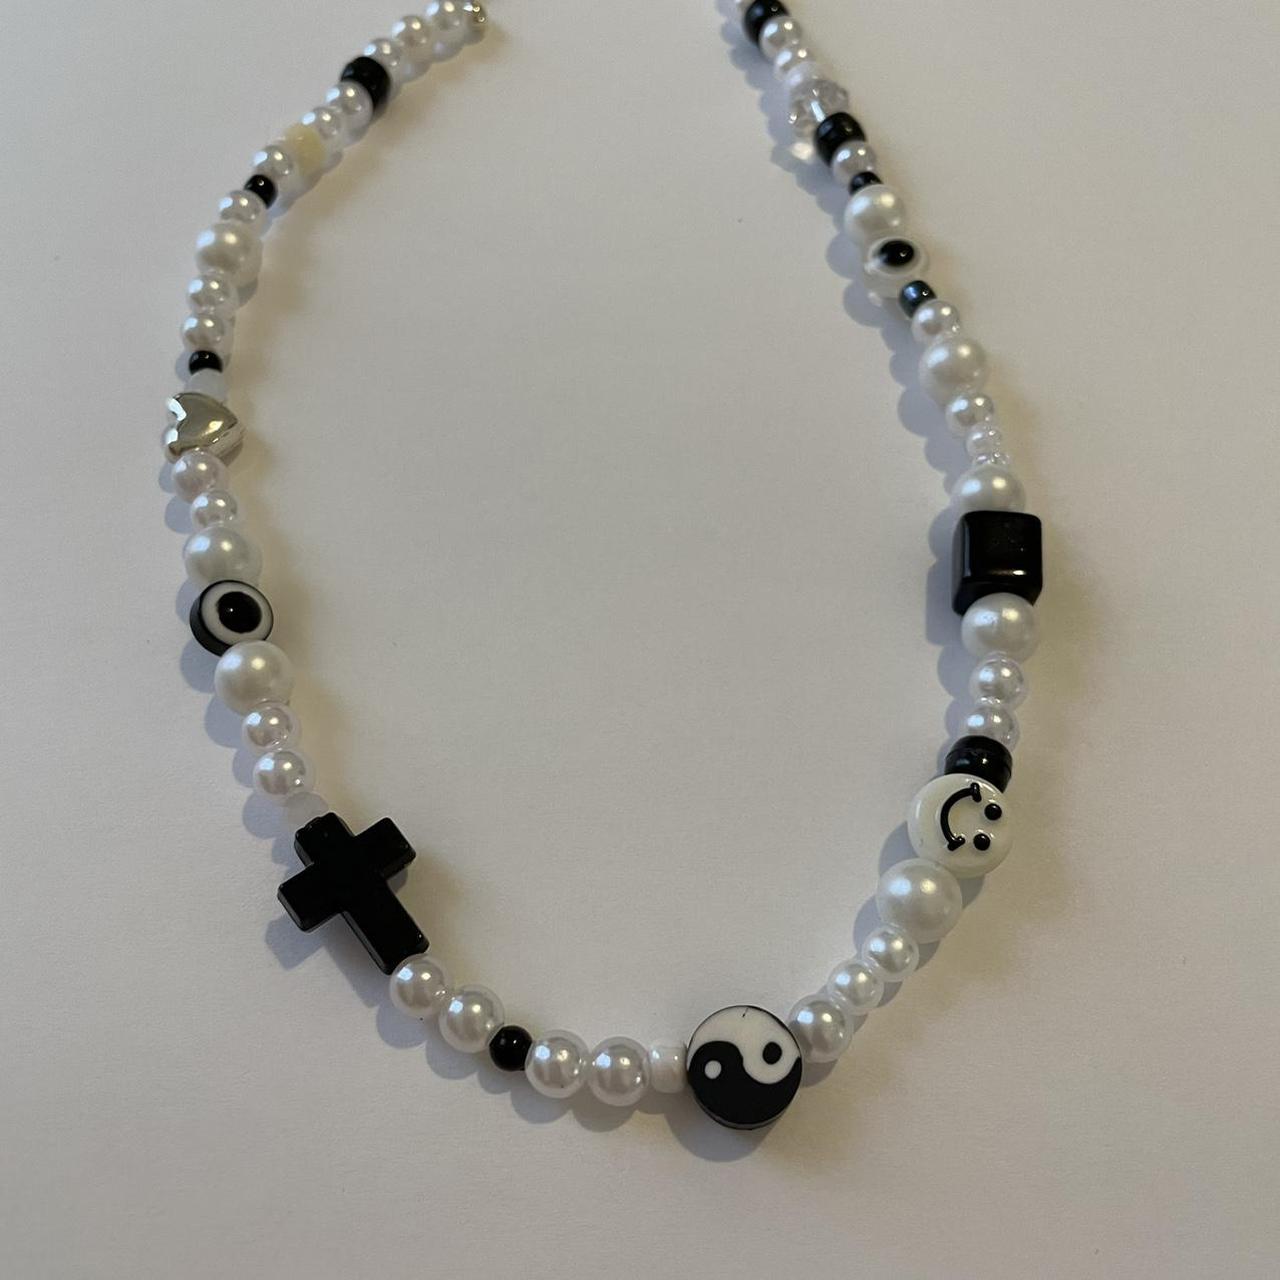 Product Image 2 - Handmade Beaded Necklace 🖤

#necklace #handmade